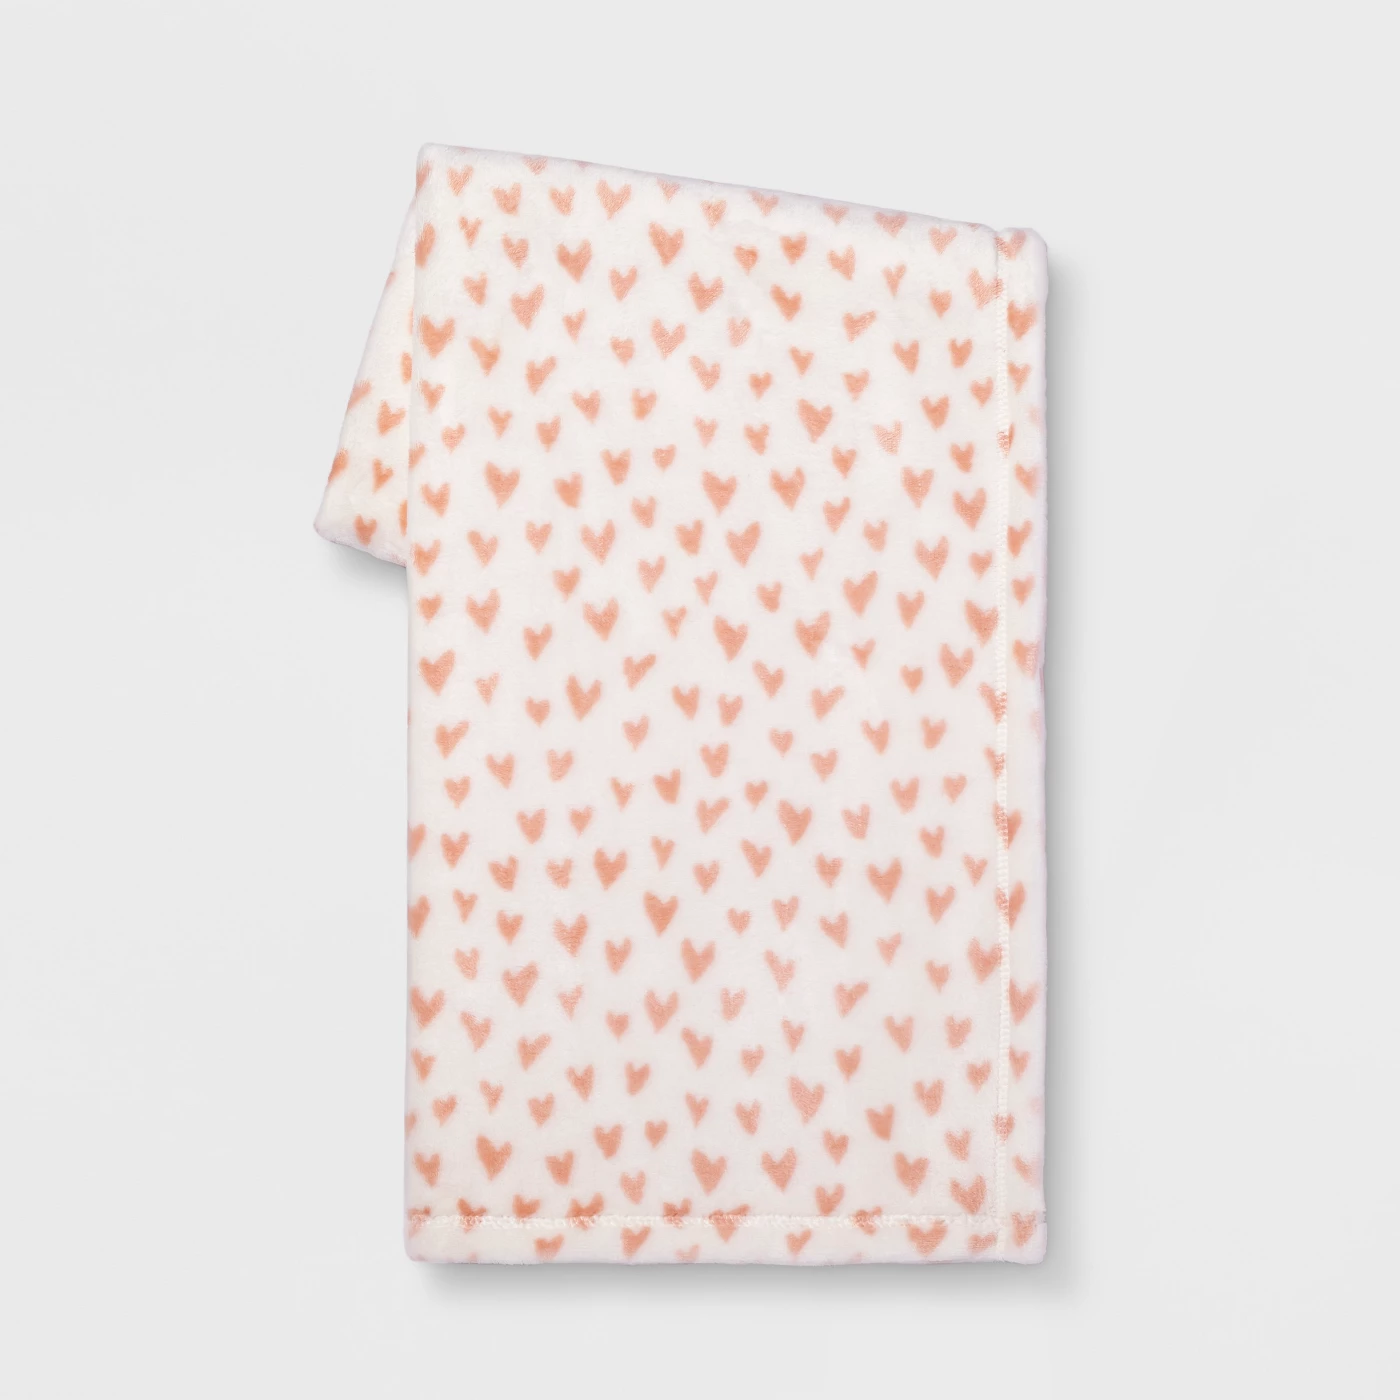 Mini Heart Plush Throw Blanket Cream - image 1 of 1